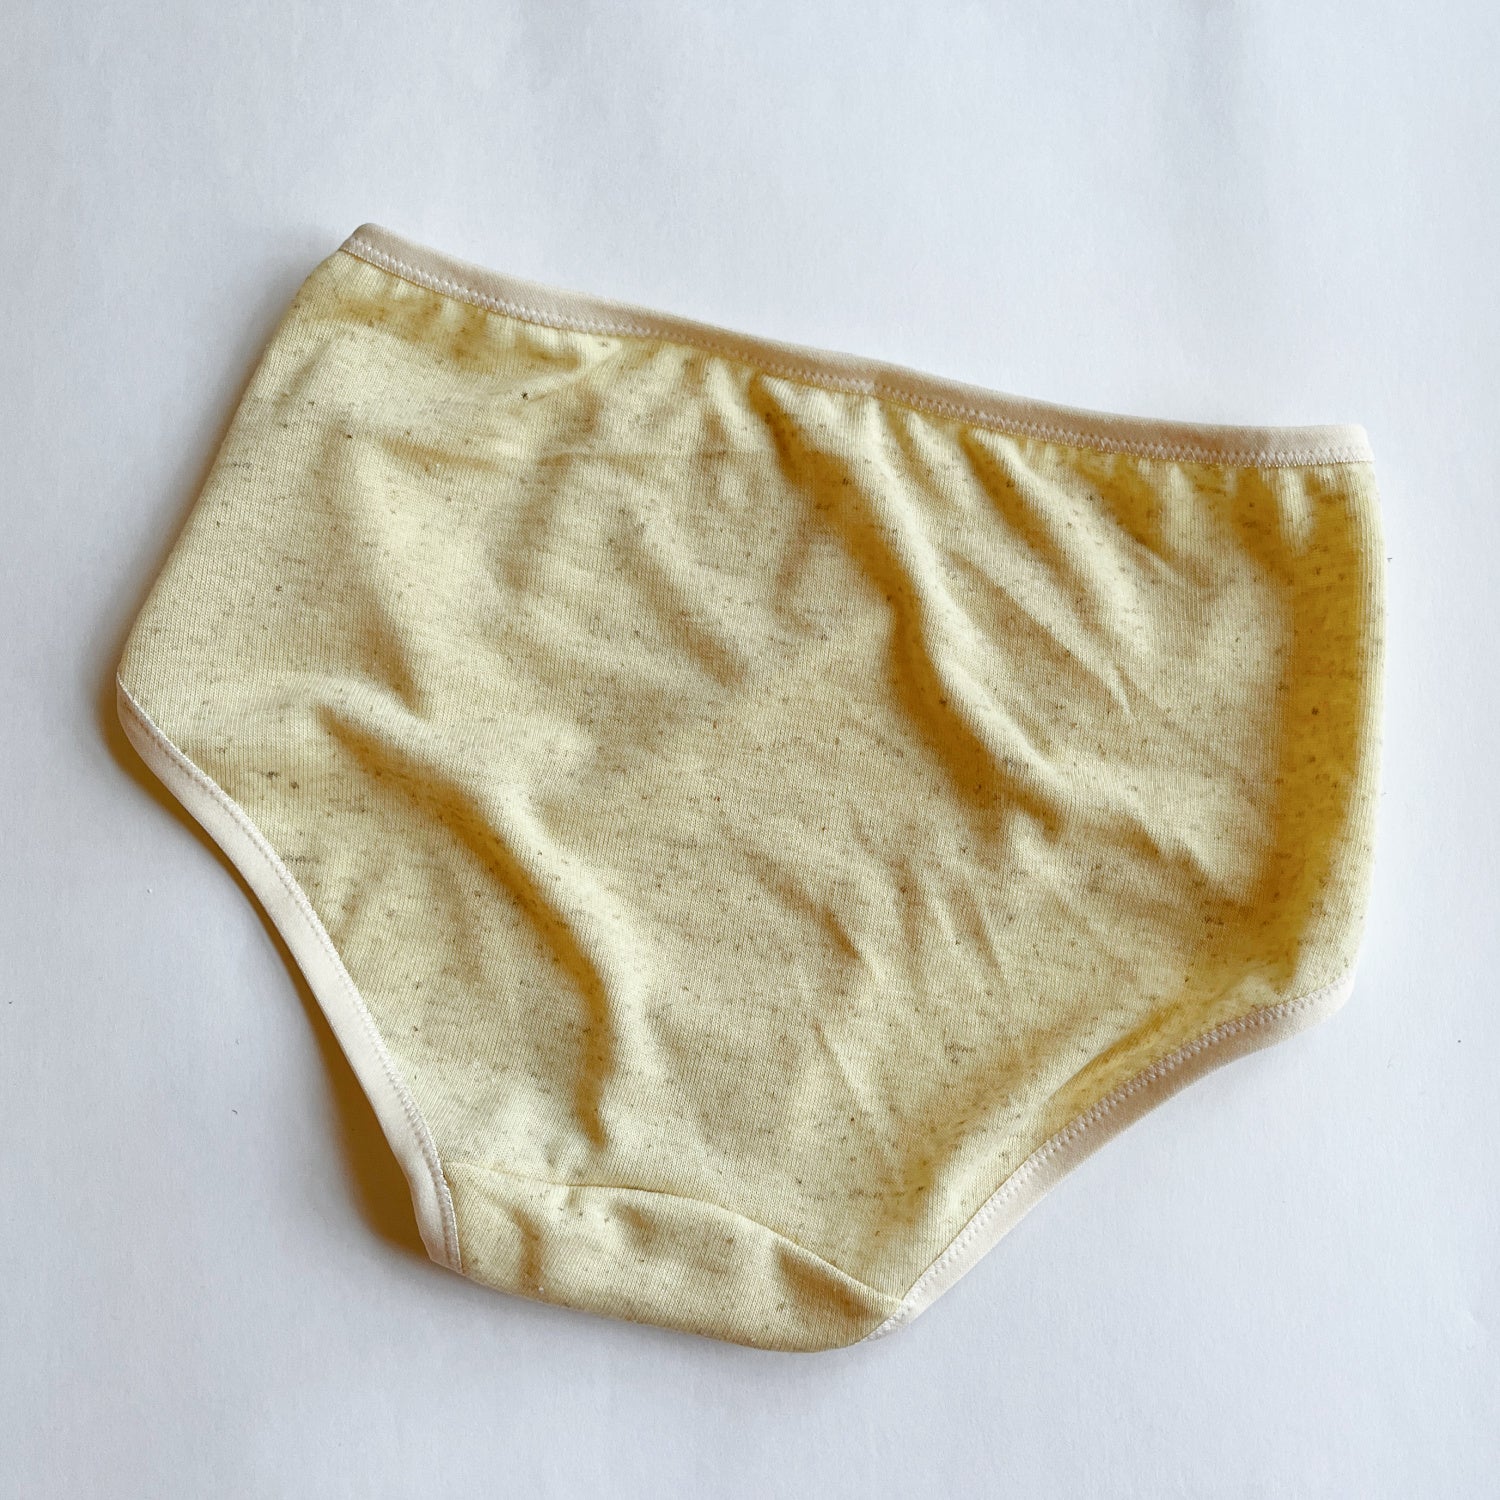 Natural linen panties women's, Shop 100% linen underwear